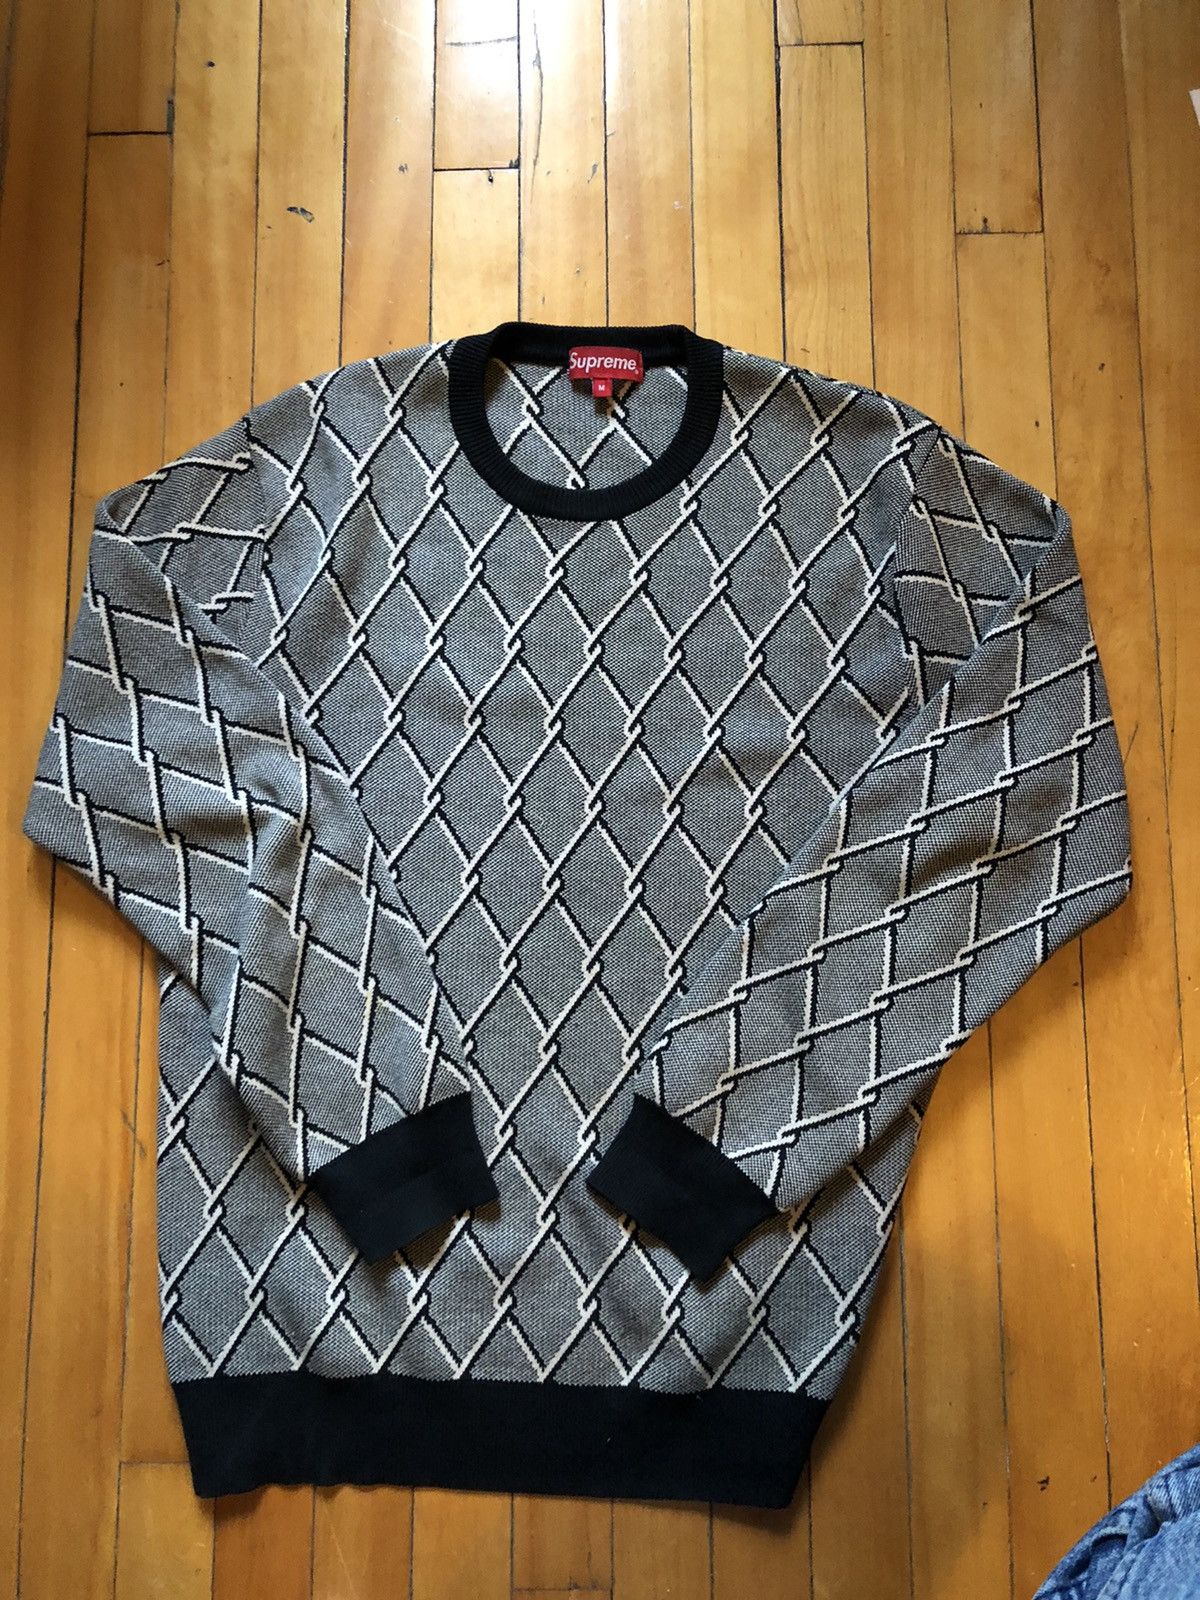 Supreme Chain Link Sweater | Grailed